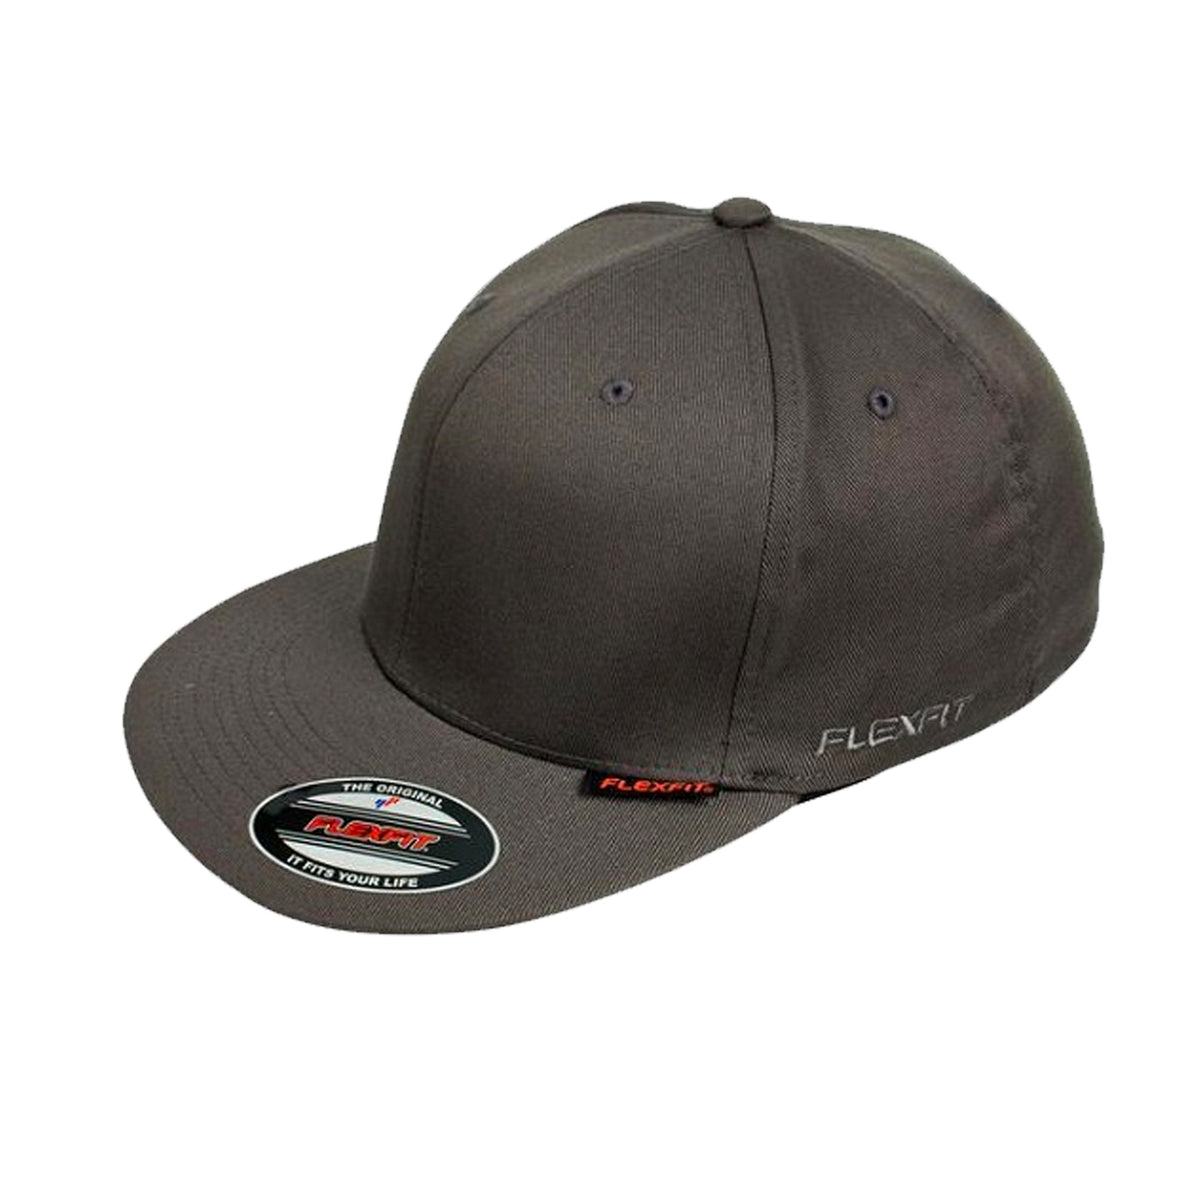 flexfit pro baseball cap in dark grey